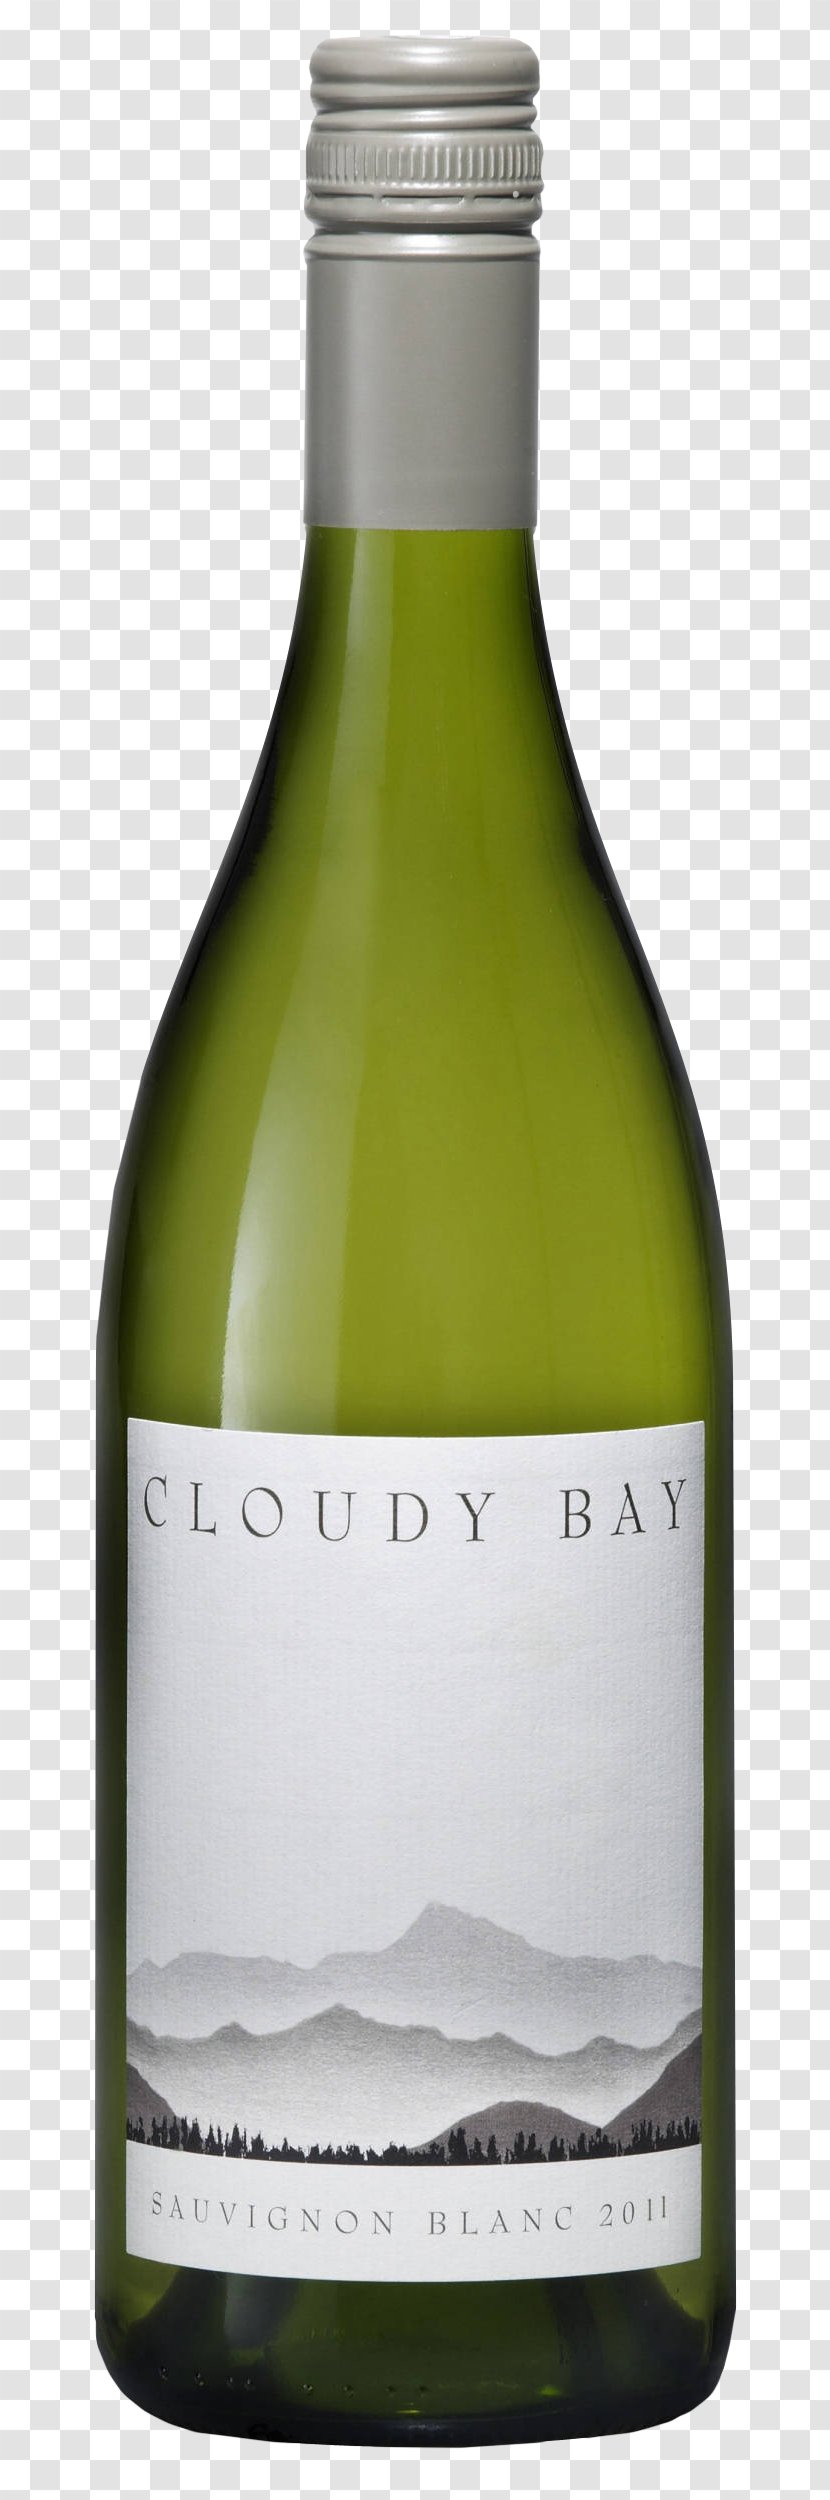 Marlborough Cloudy Bay Vineyards White Wine Common Grape Vine - New Zealand - Pure Leaf Lemon Tea Bottle Transparent PNG